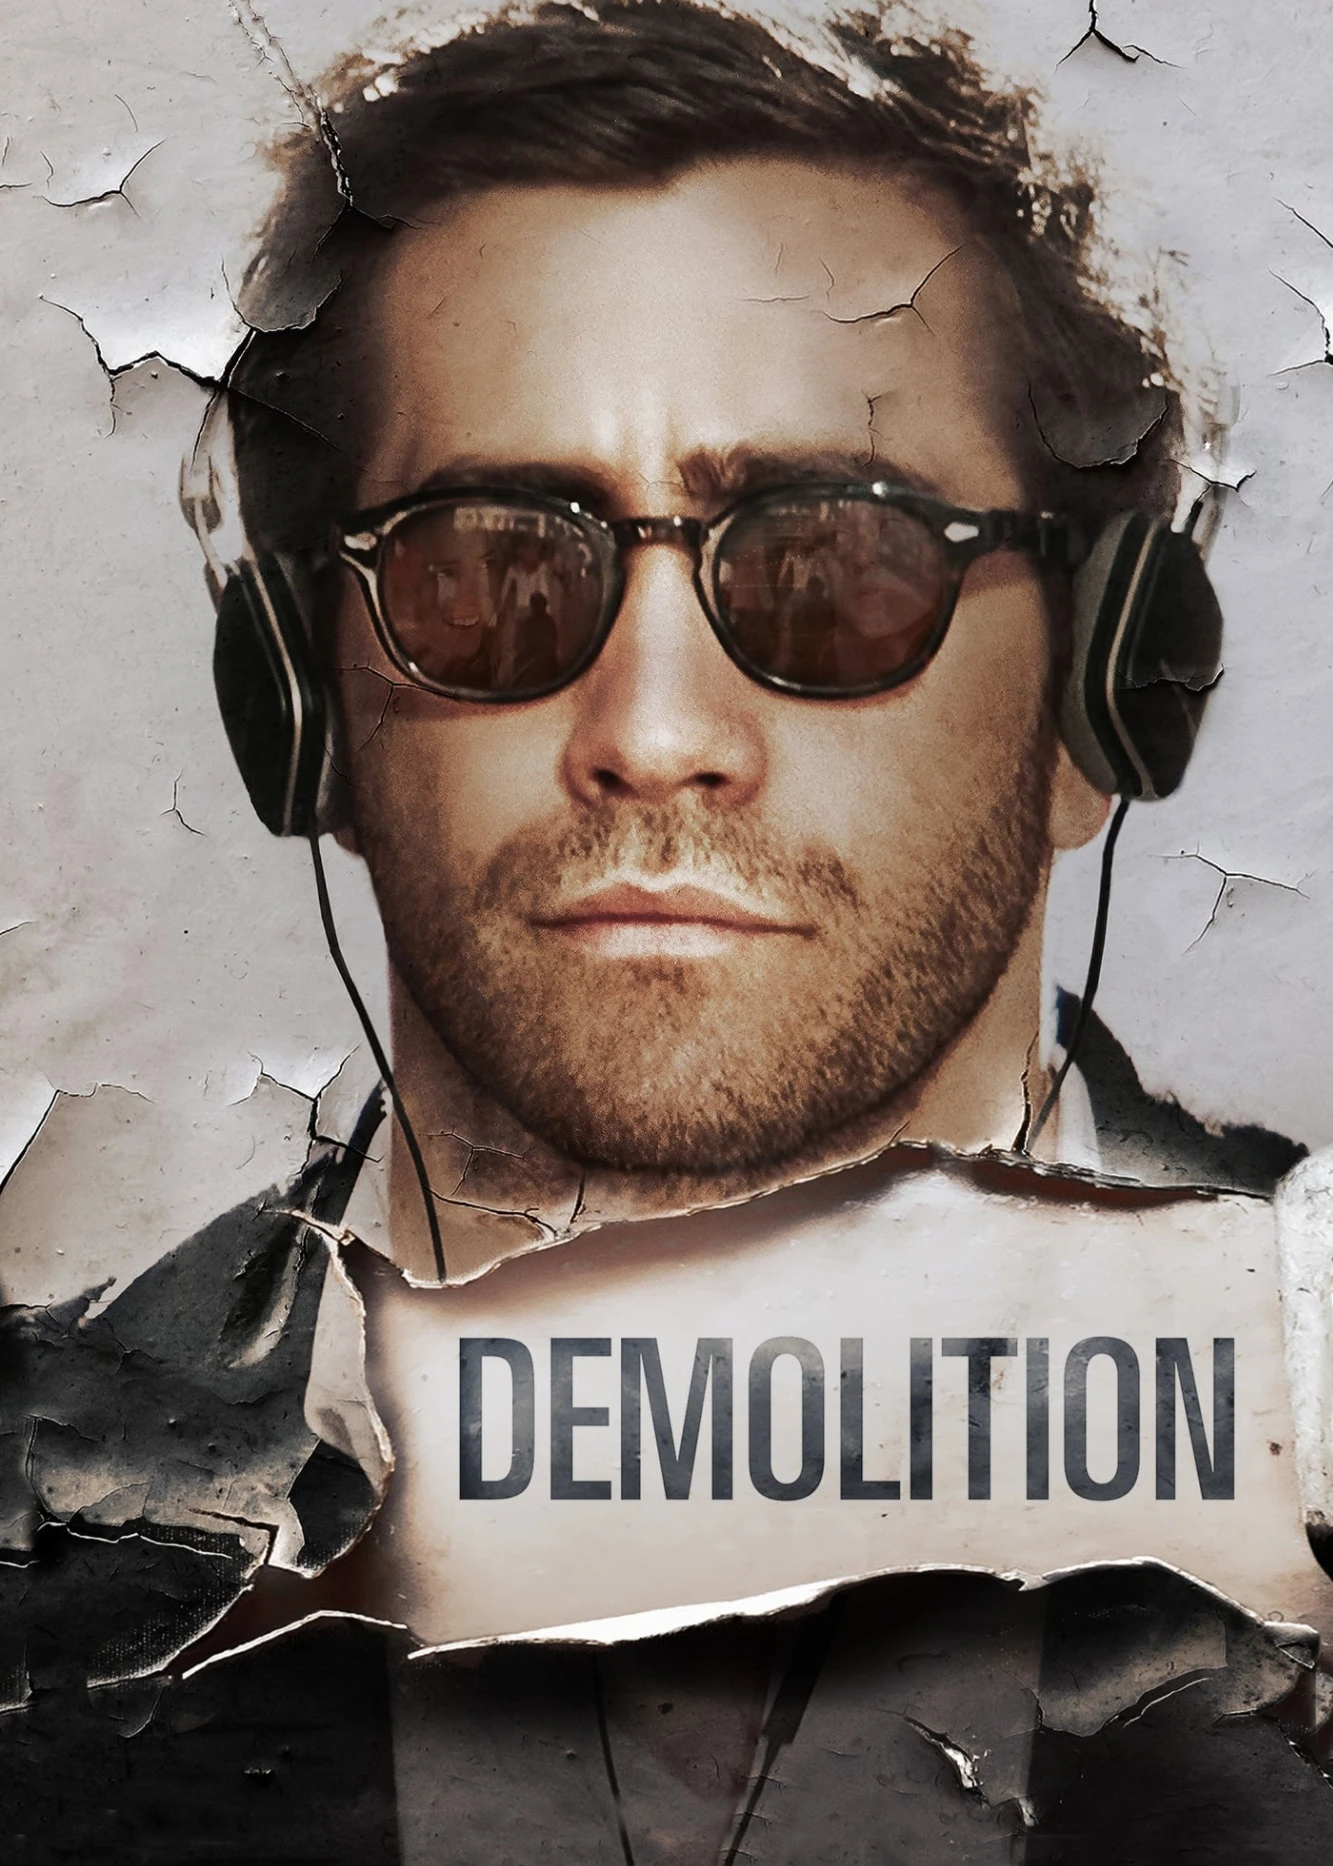 Demolition | Demolition (2015)